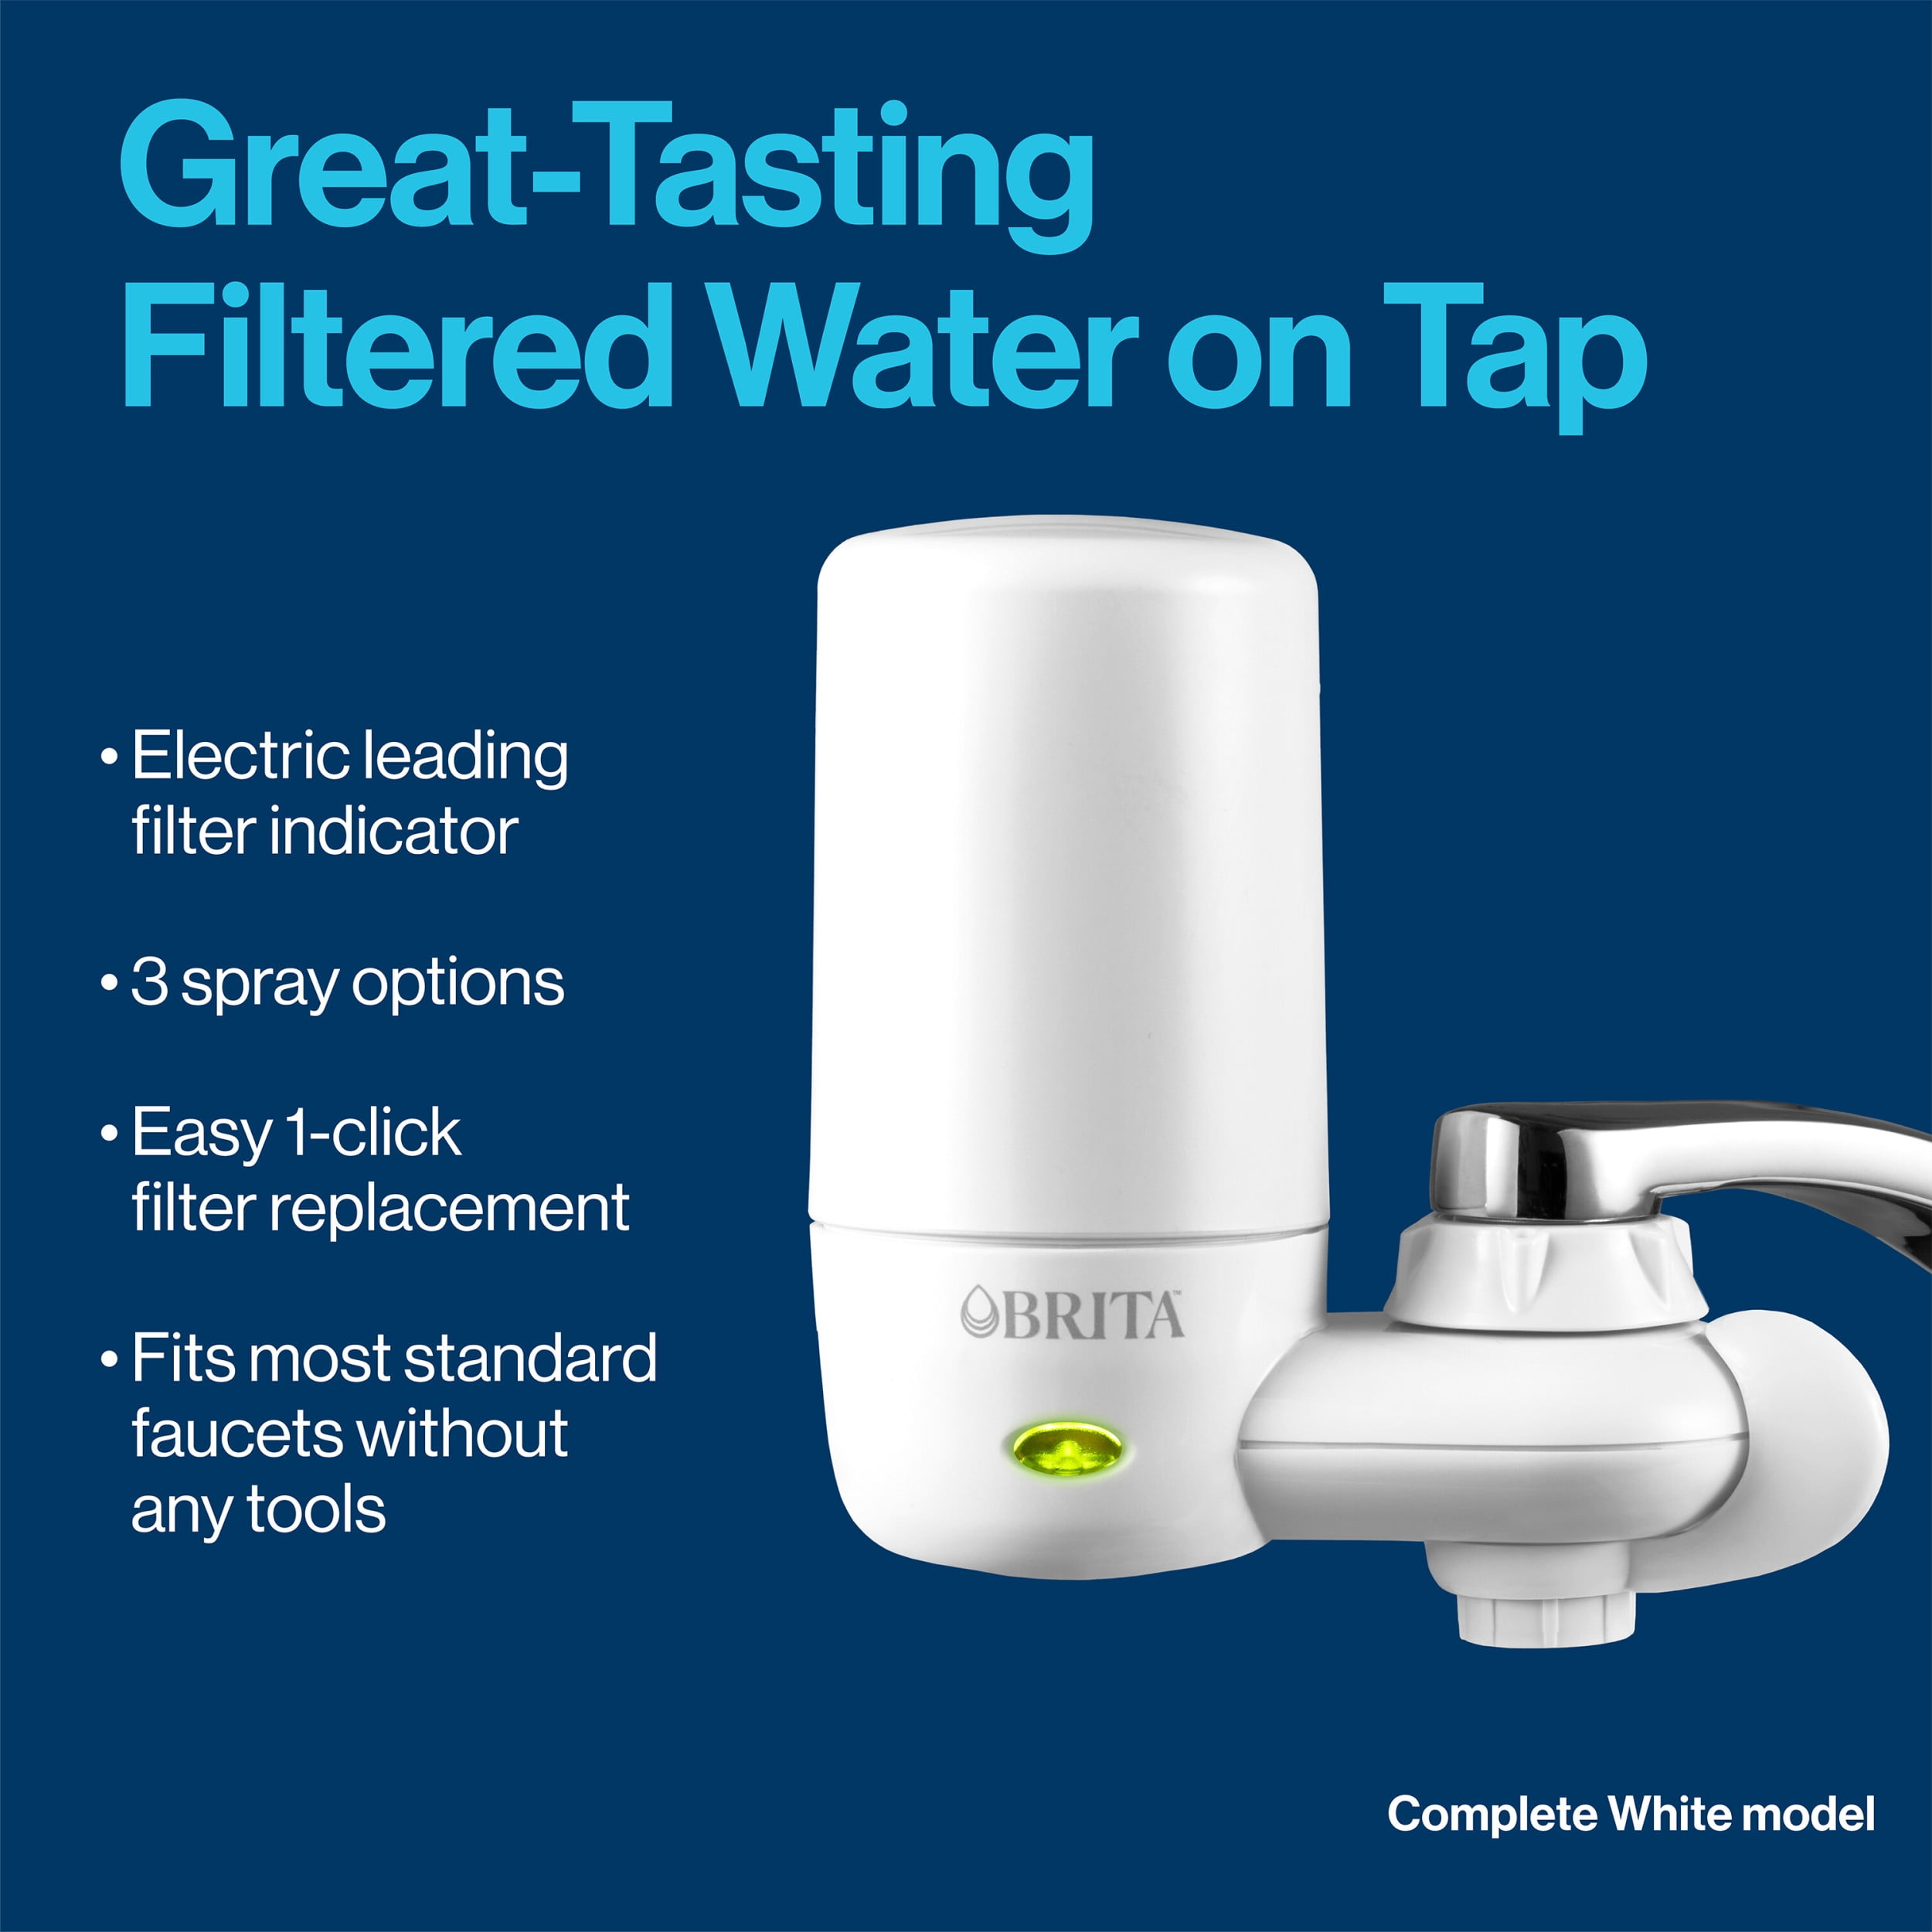 Brita Tap Water Filter System, item 3174 New/in Open Box List $45.49